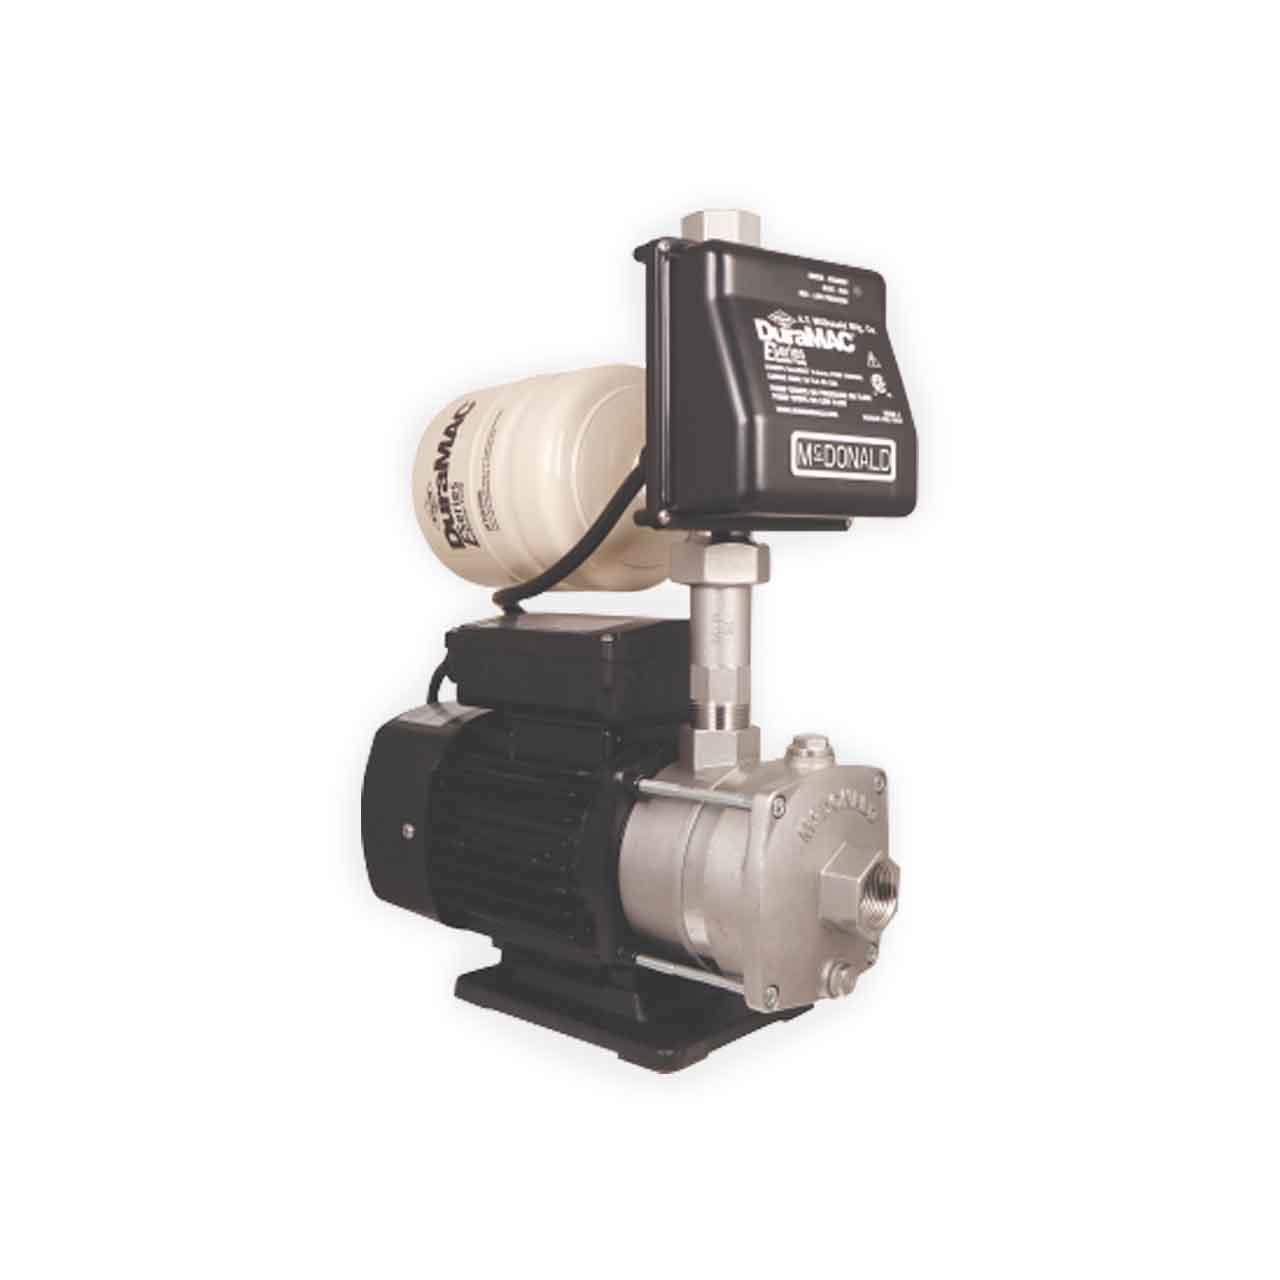 Express Water Adjustable Water Booster Pump – Reverse Osmosis Water Fi